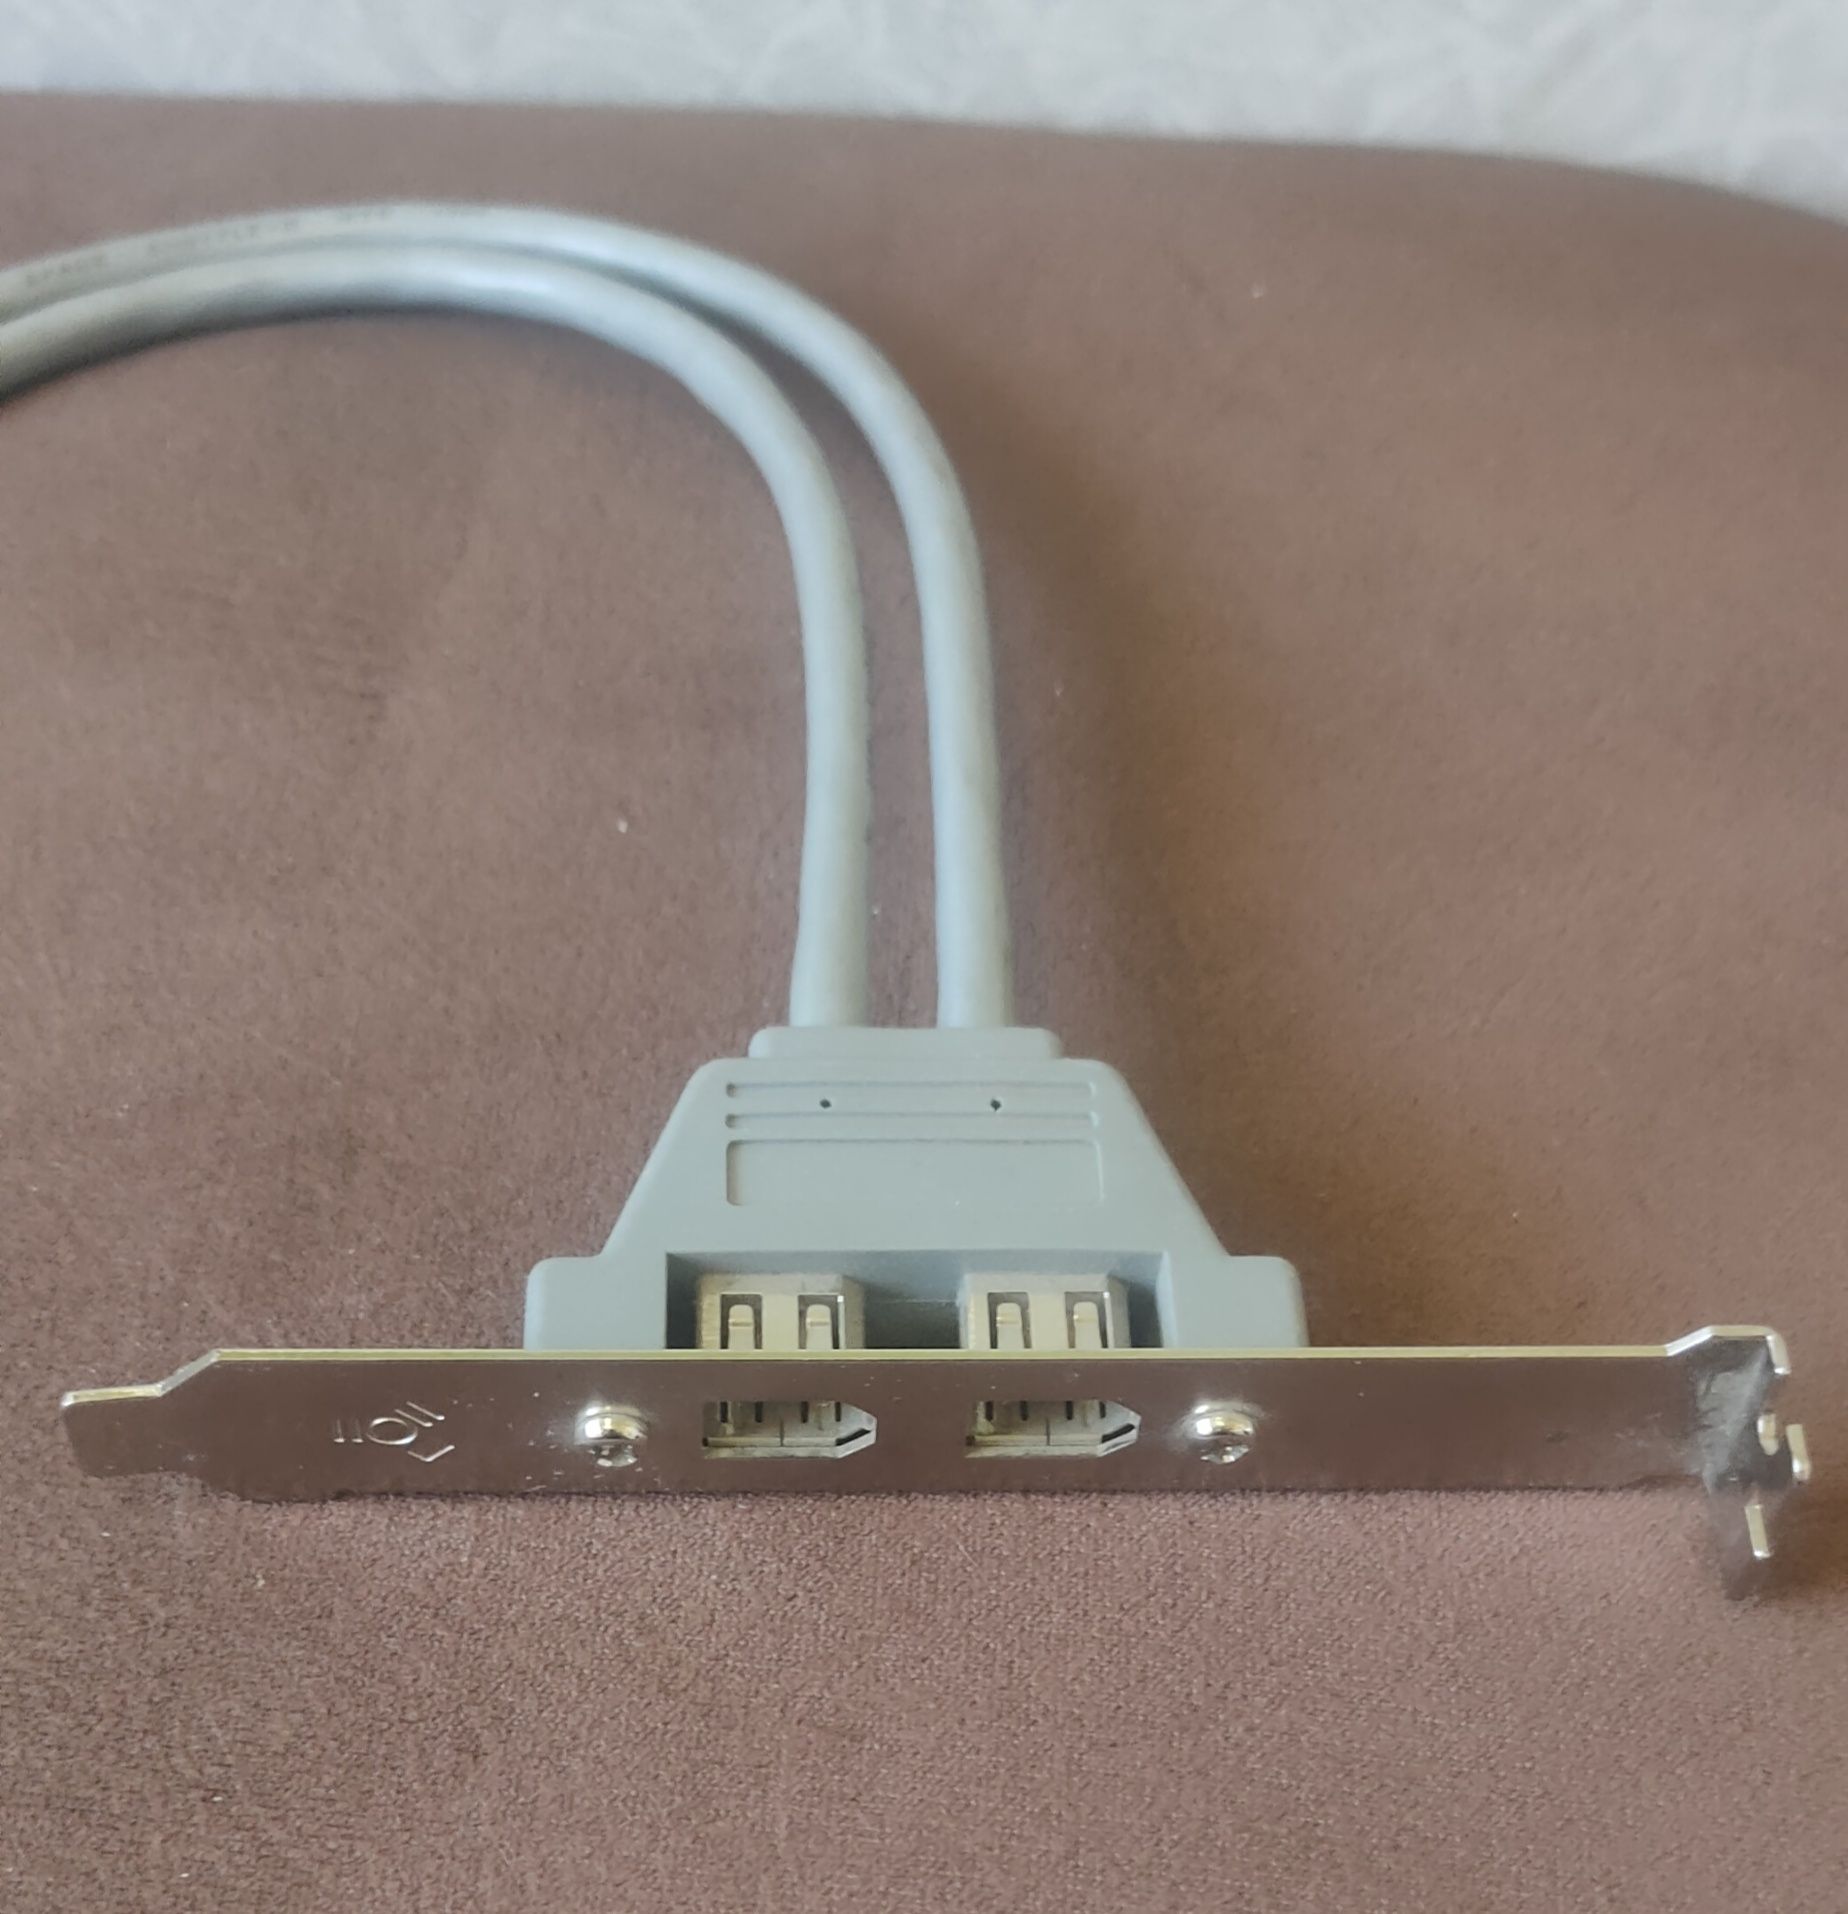 Планки портов USB и FireWire